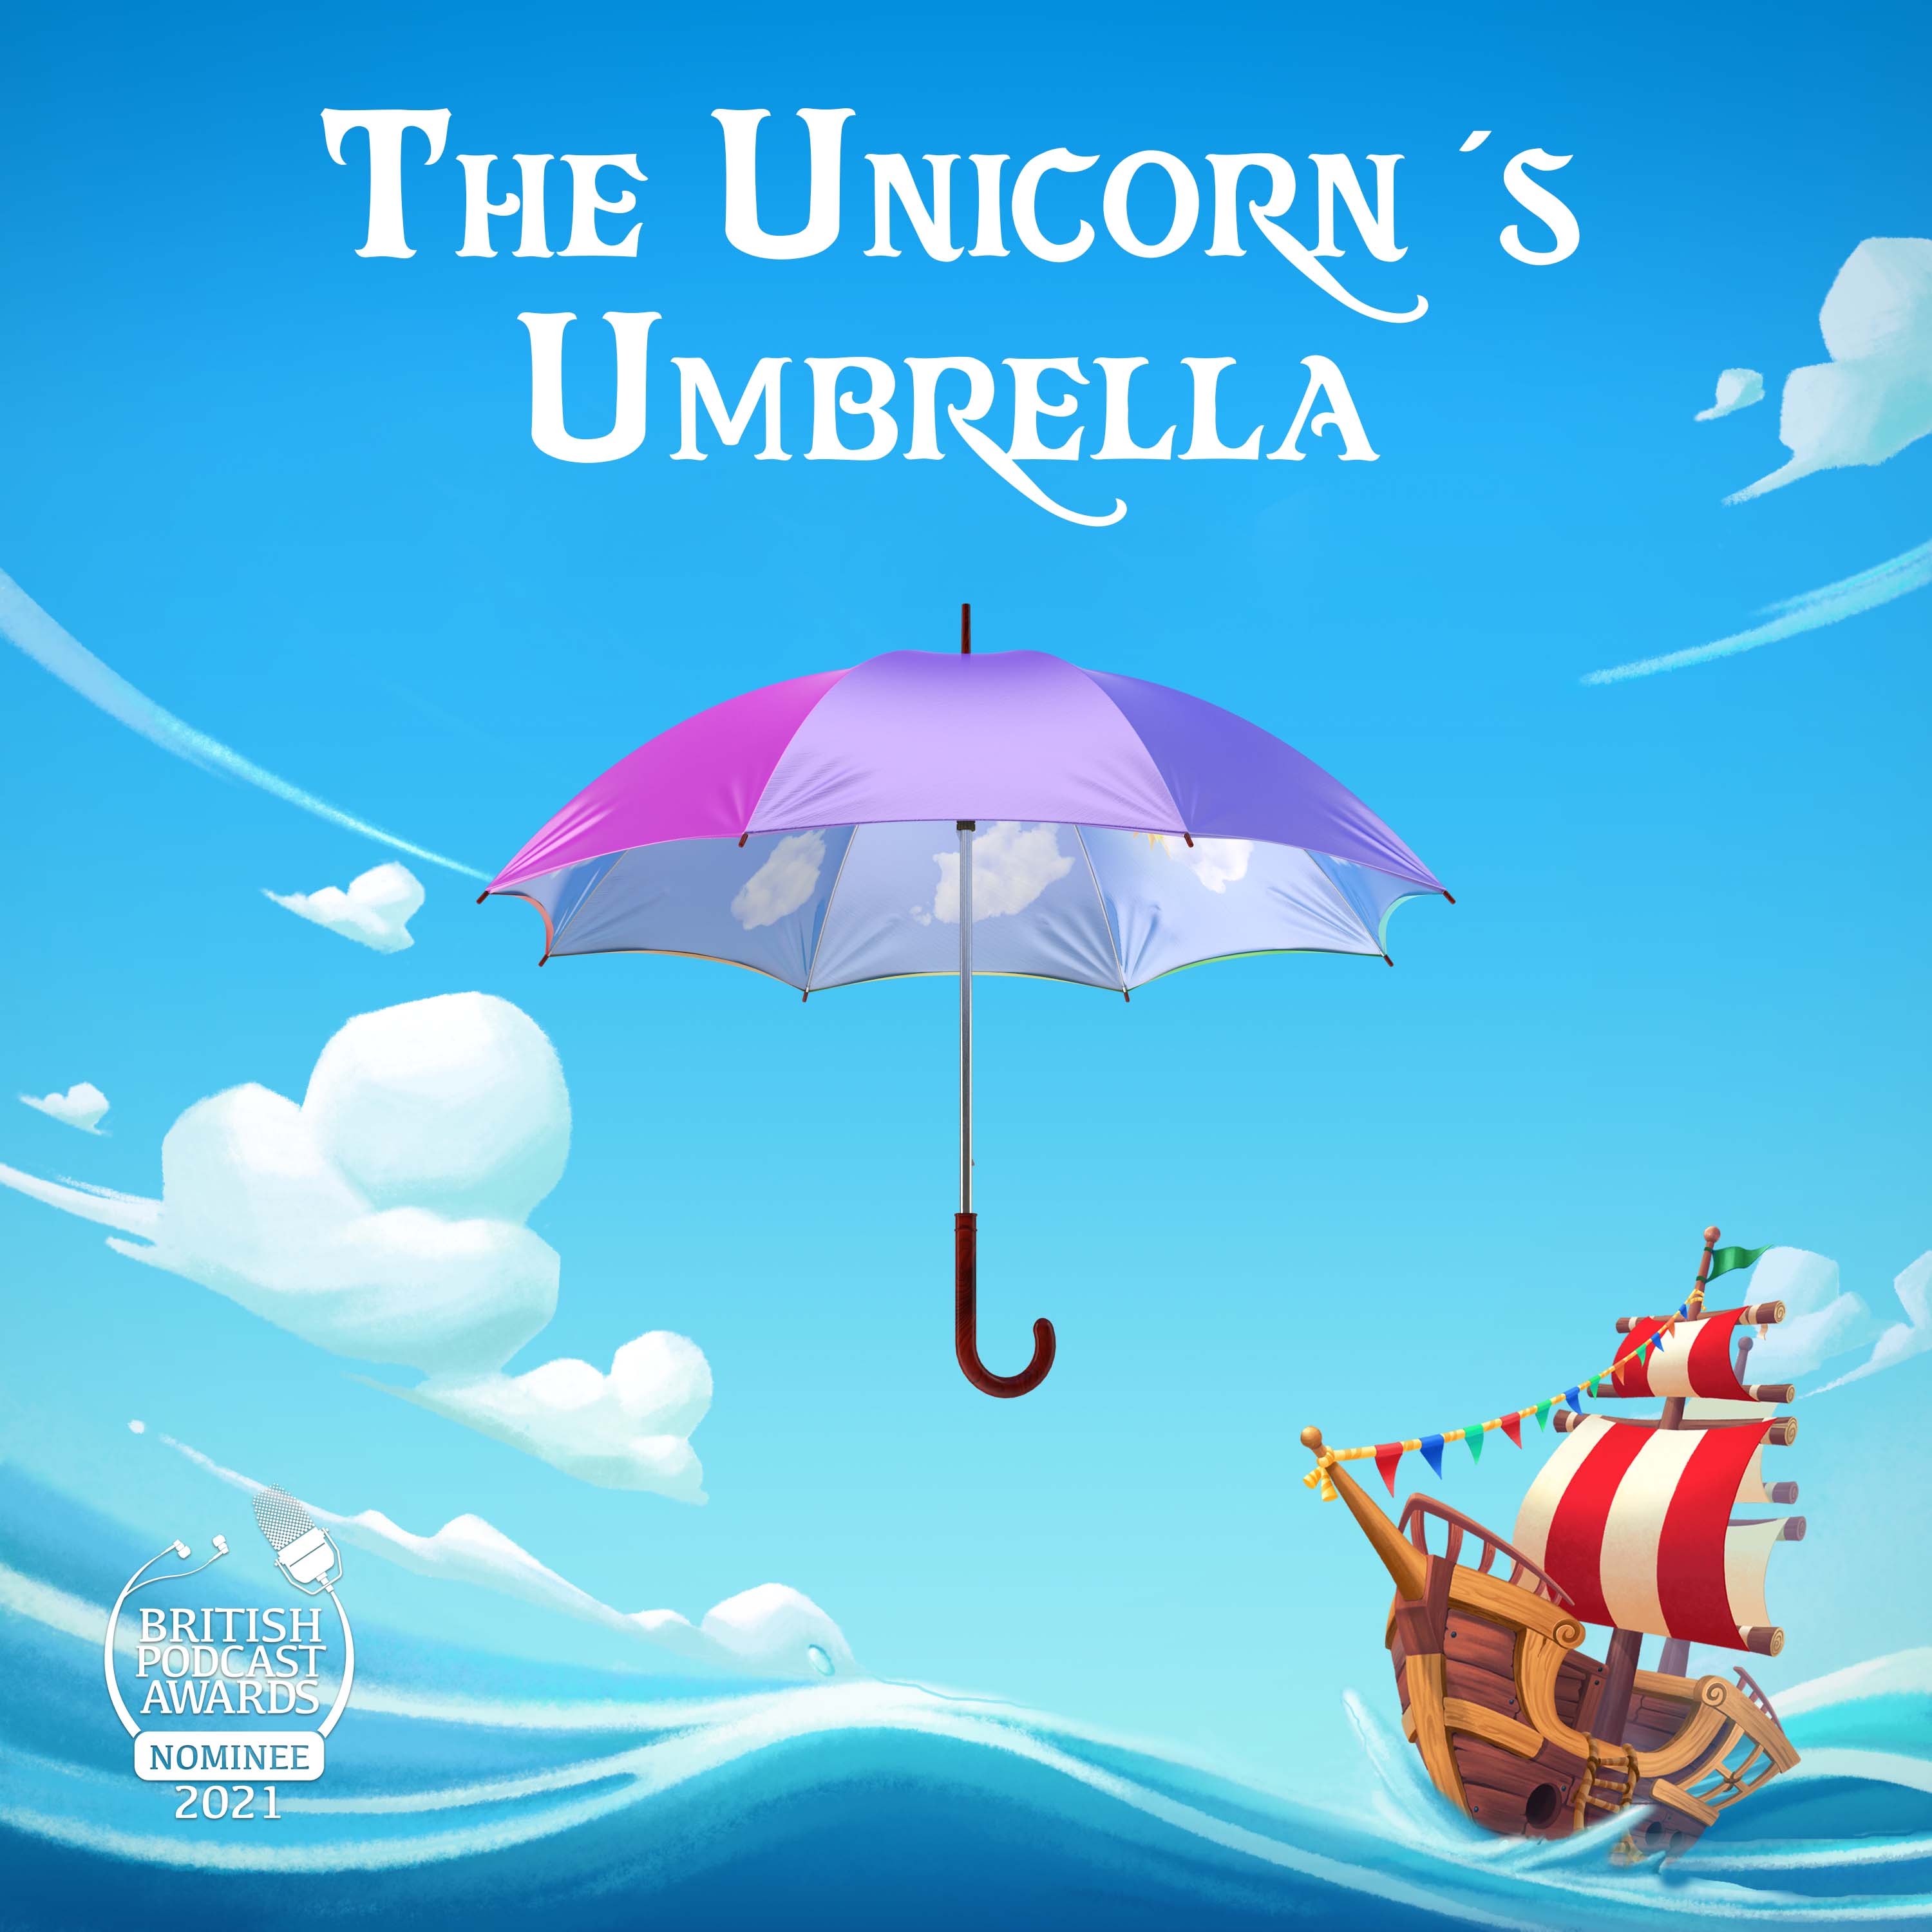 The Unicorn’s Umbrella